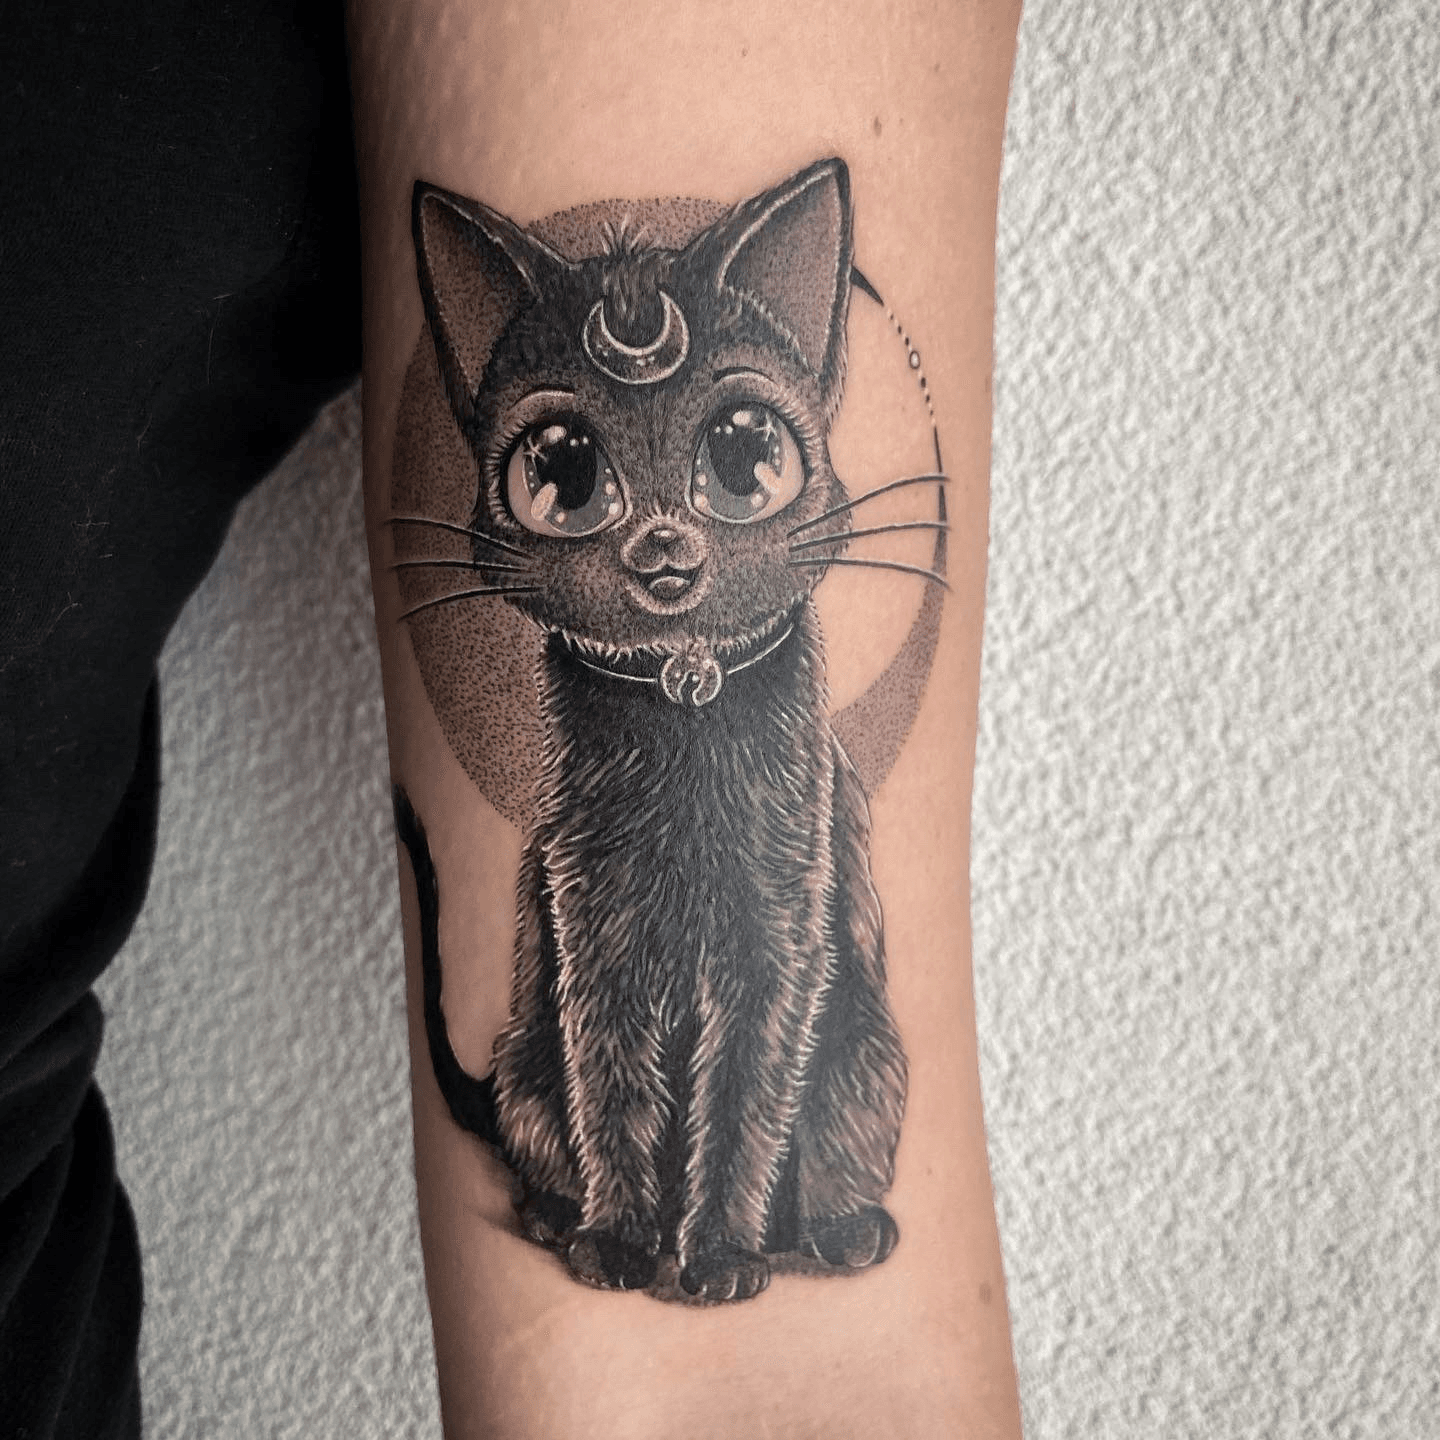 Luna sailor moon tattoo by tattoosuzette on DeviantArt